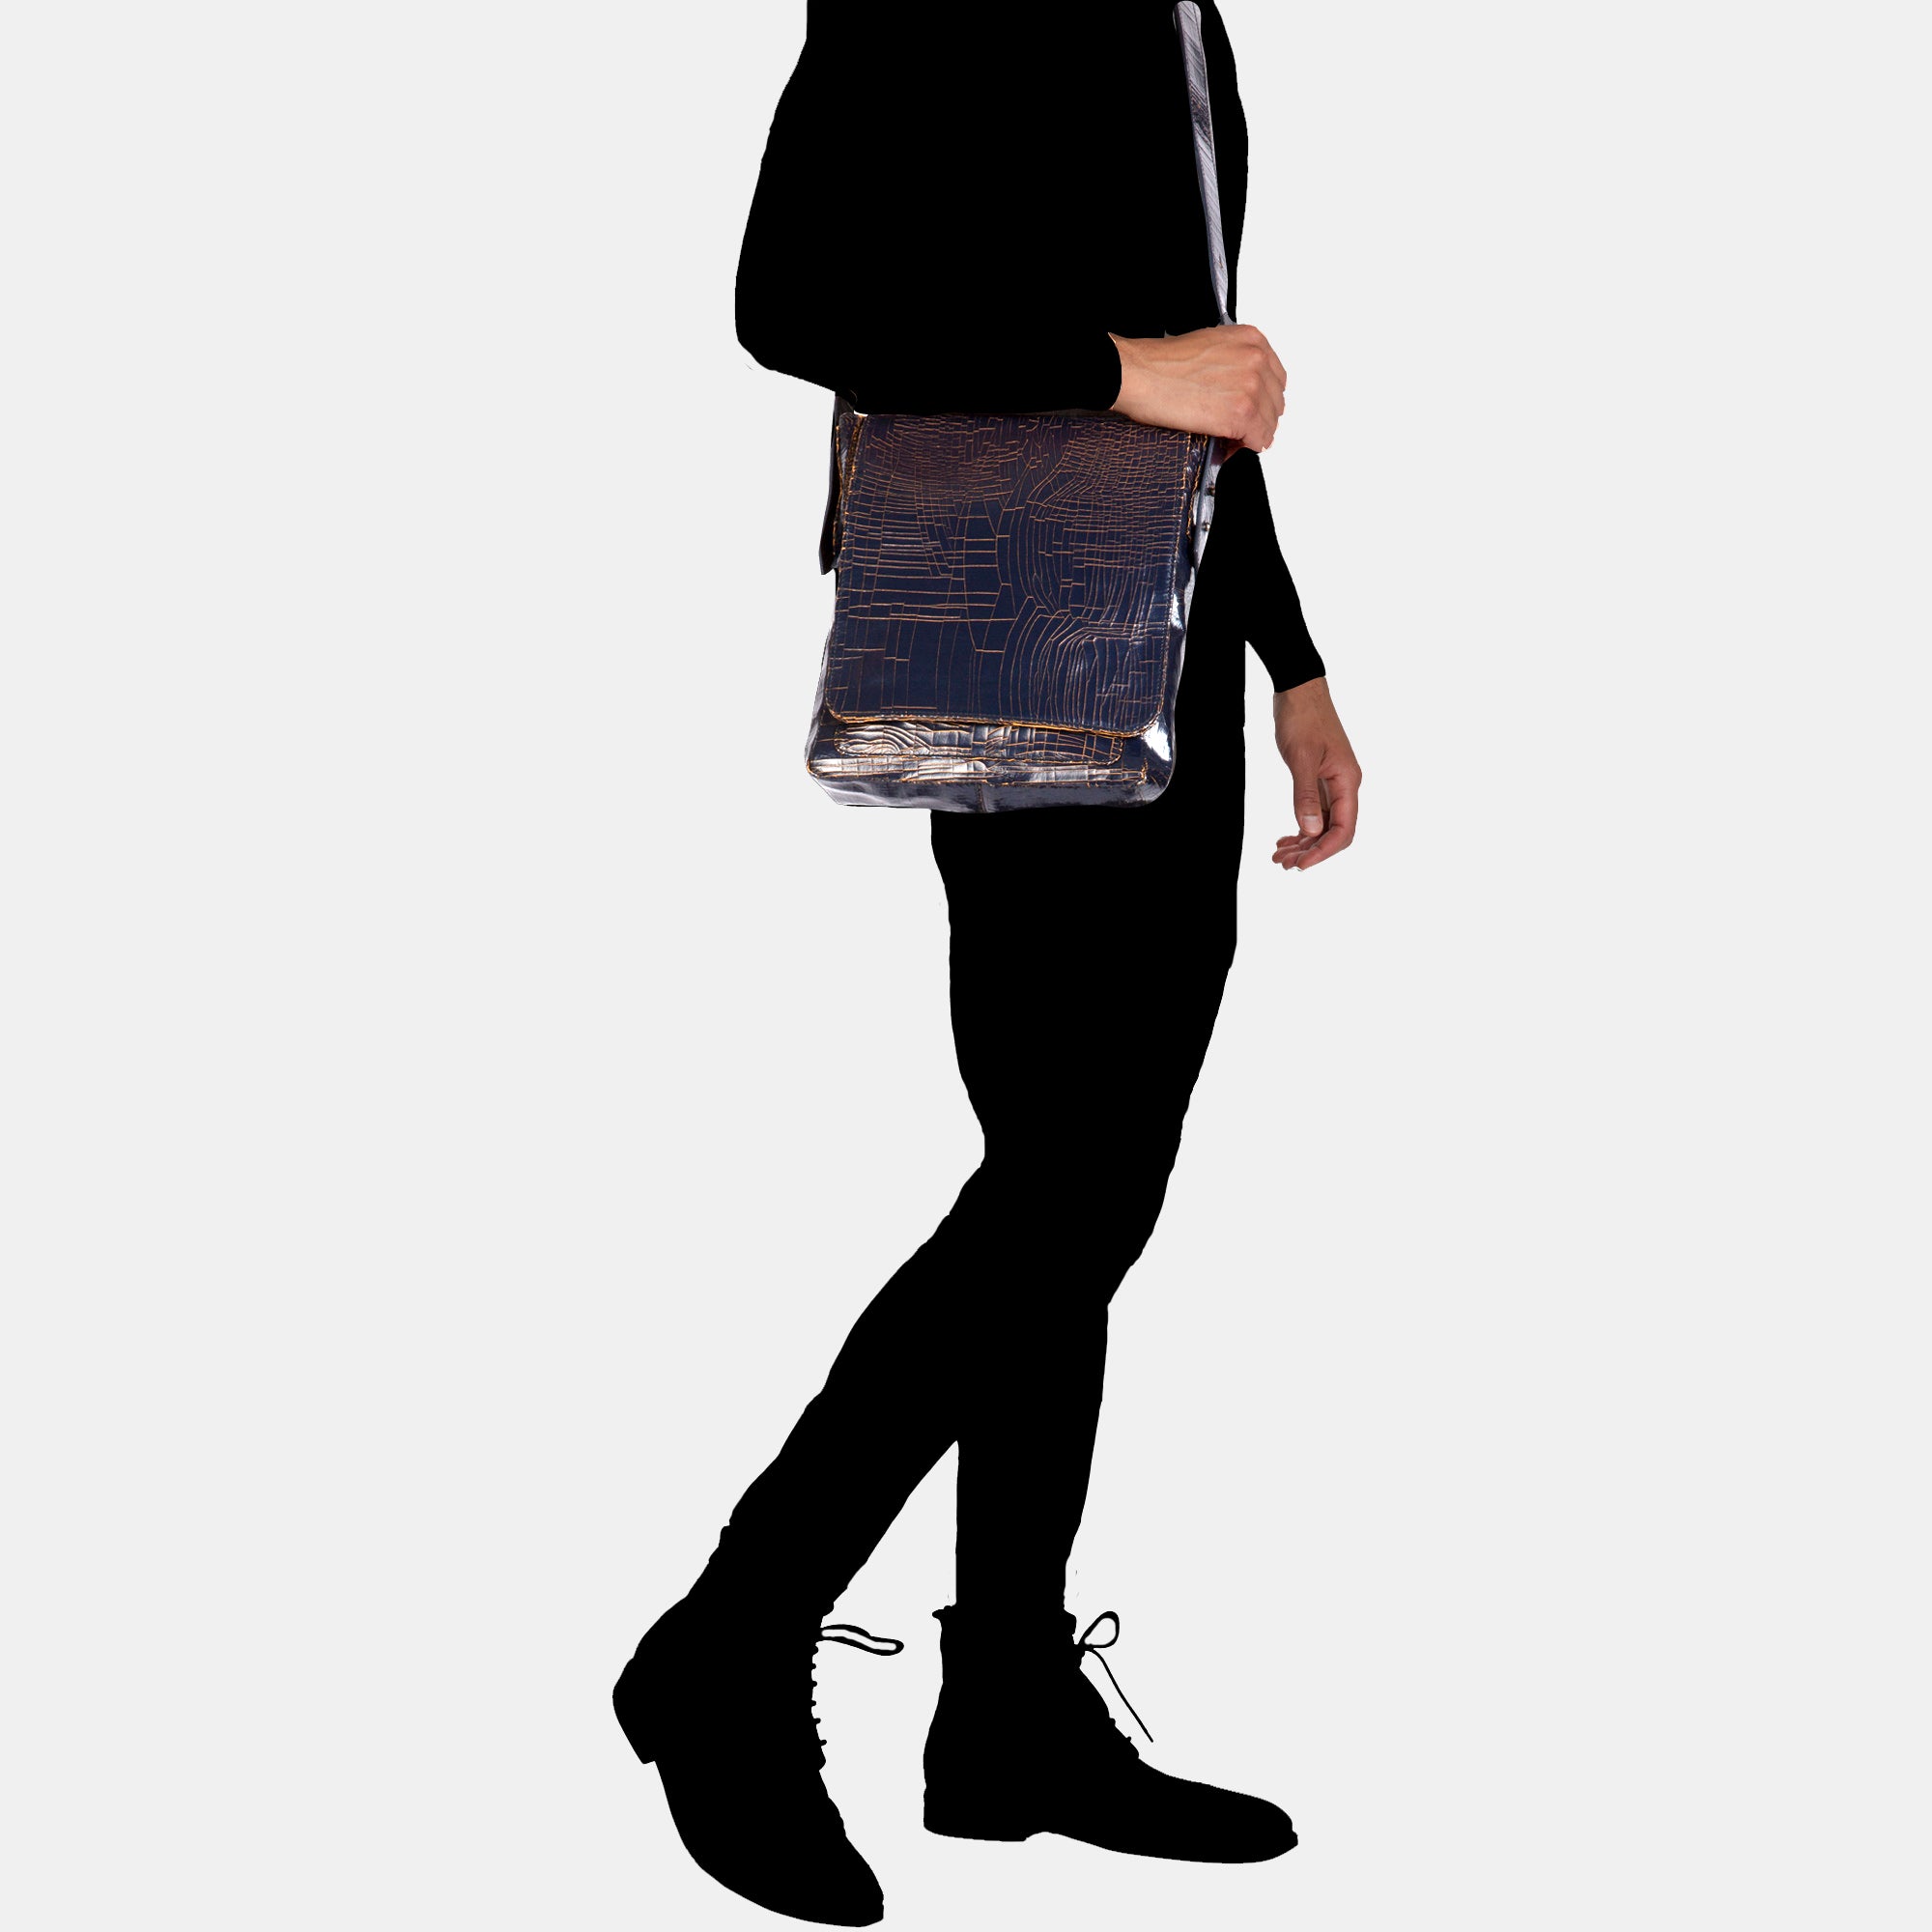 Luxury Leather sustainable silk messenger handbag crossbody bag